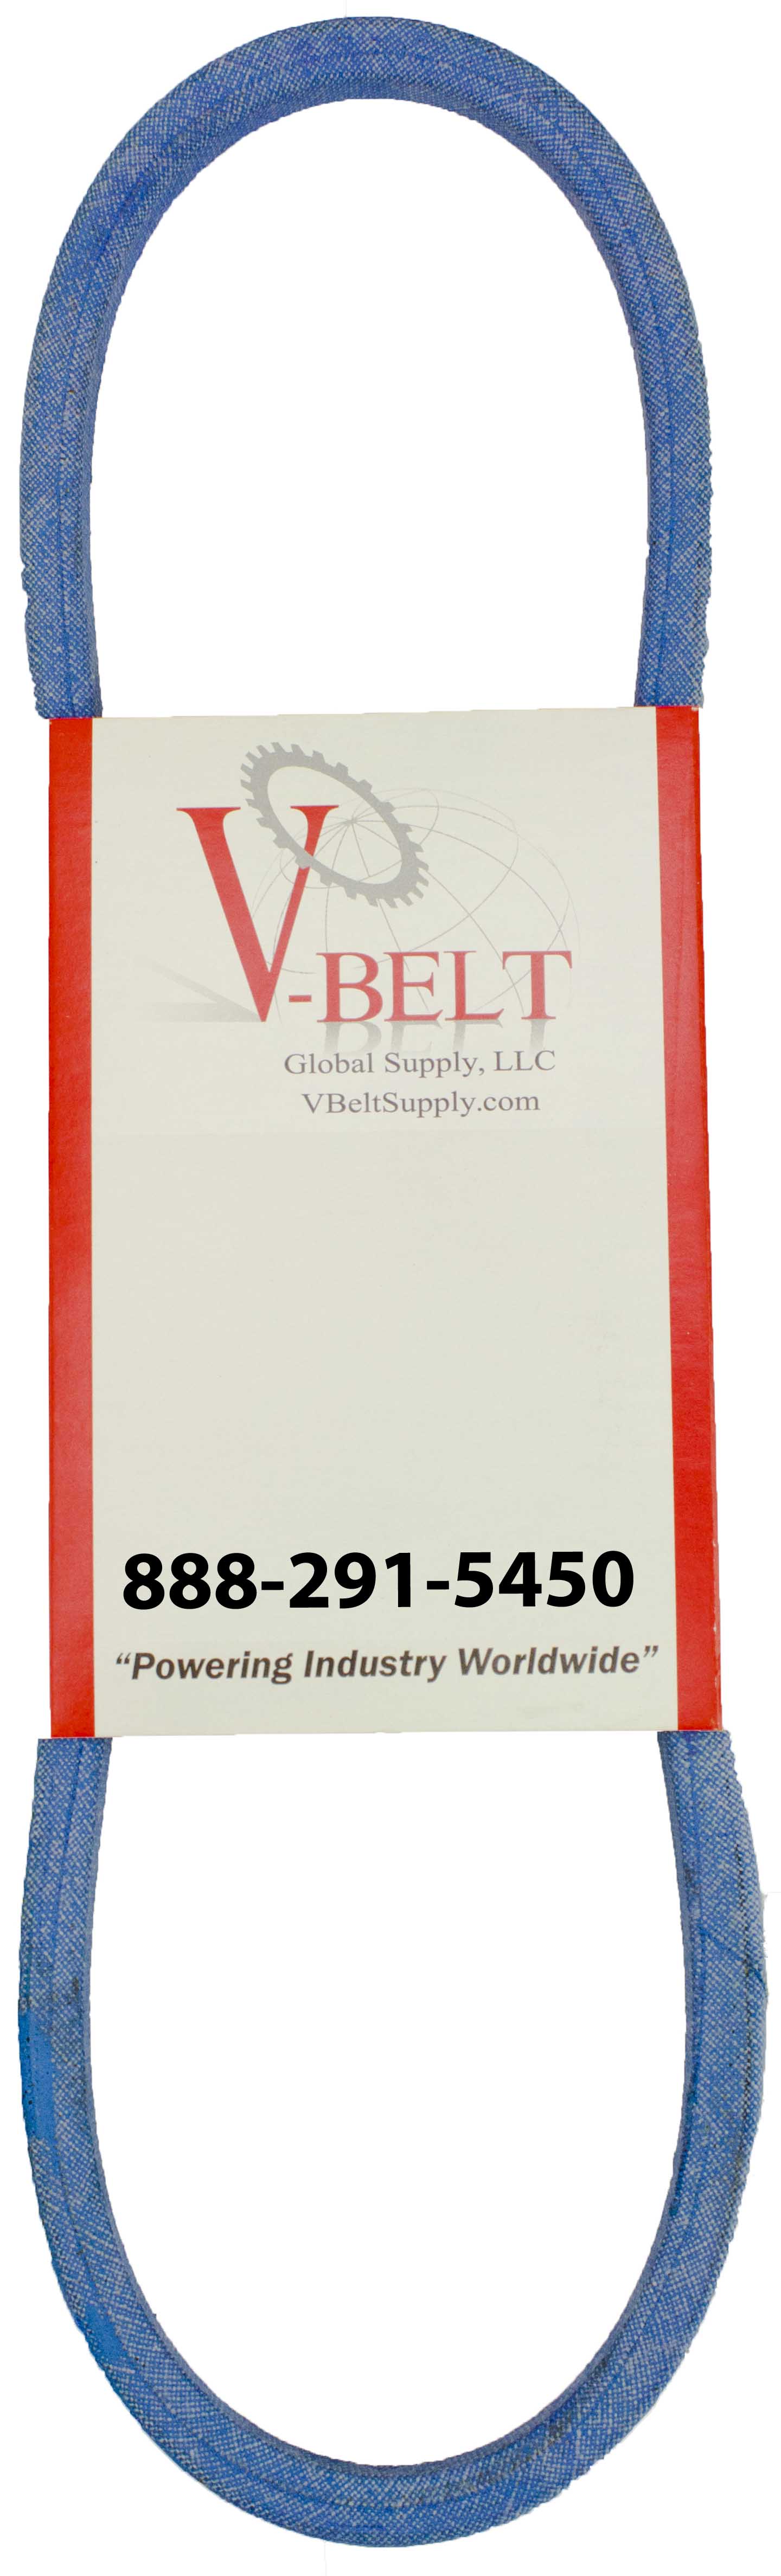 RubberBeltsOnline V Belt B46K B-SECTION KEVLAR Top Width 5/8 Thickness 13/32 Length 49 inch industrial applications 5L490K 